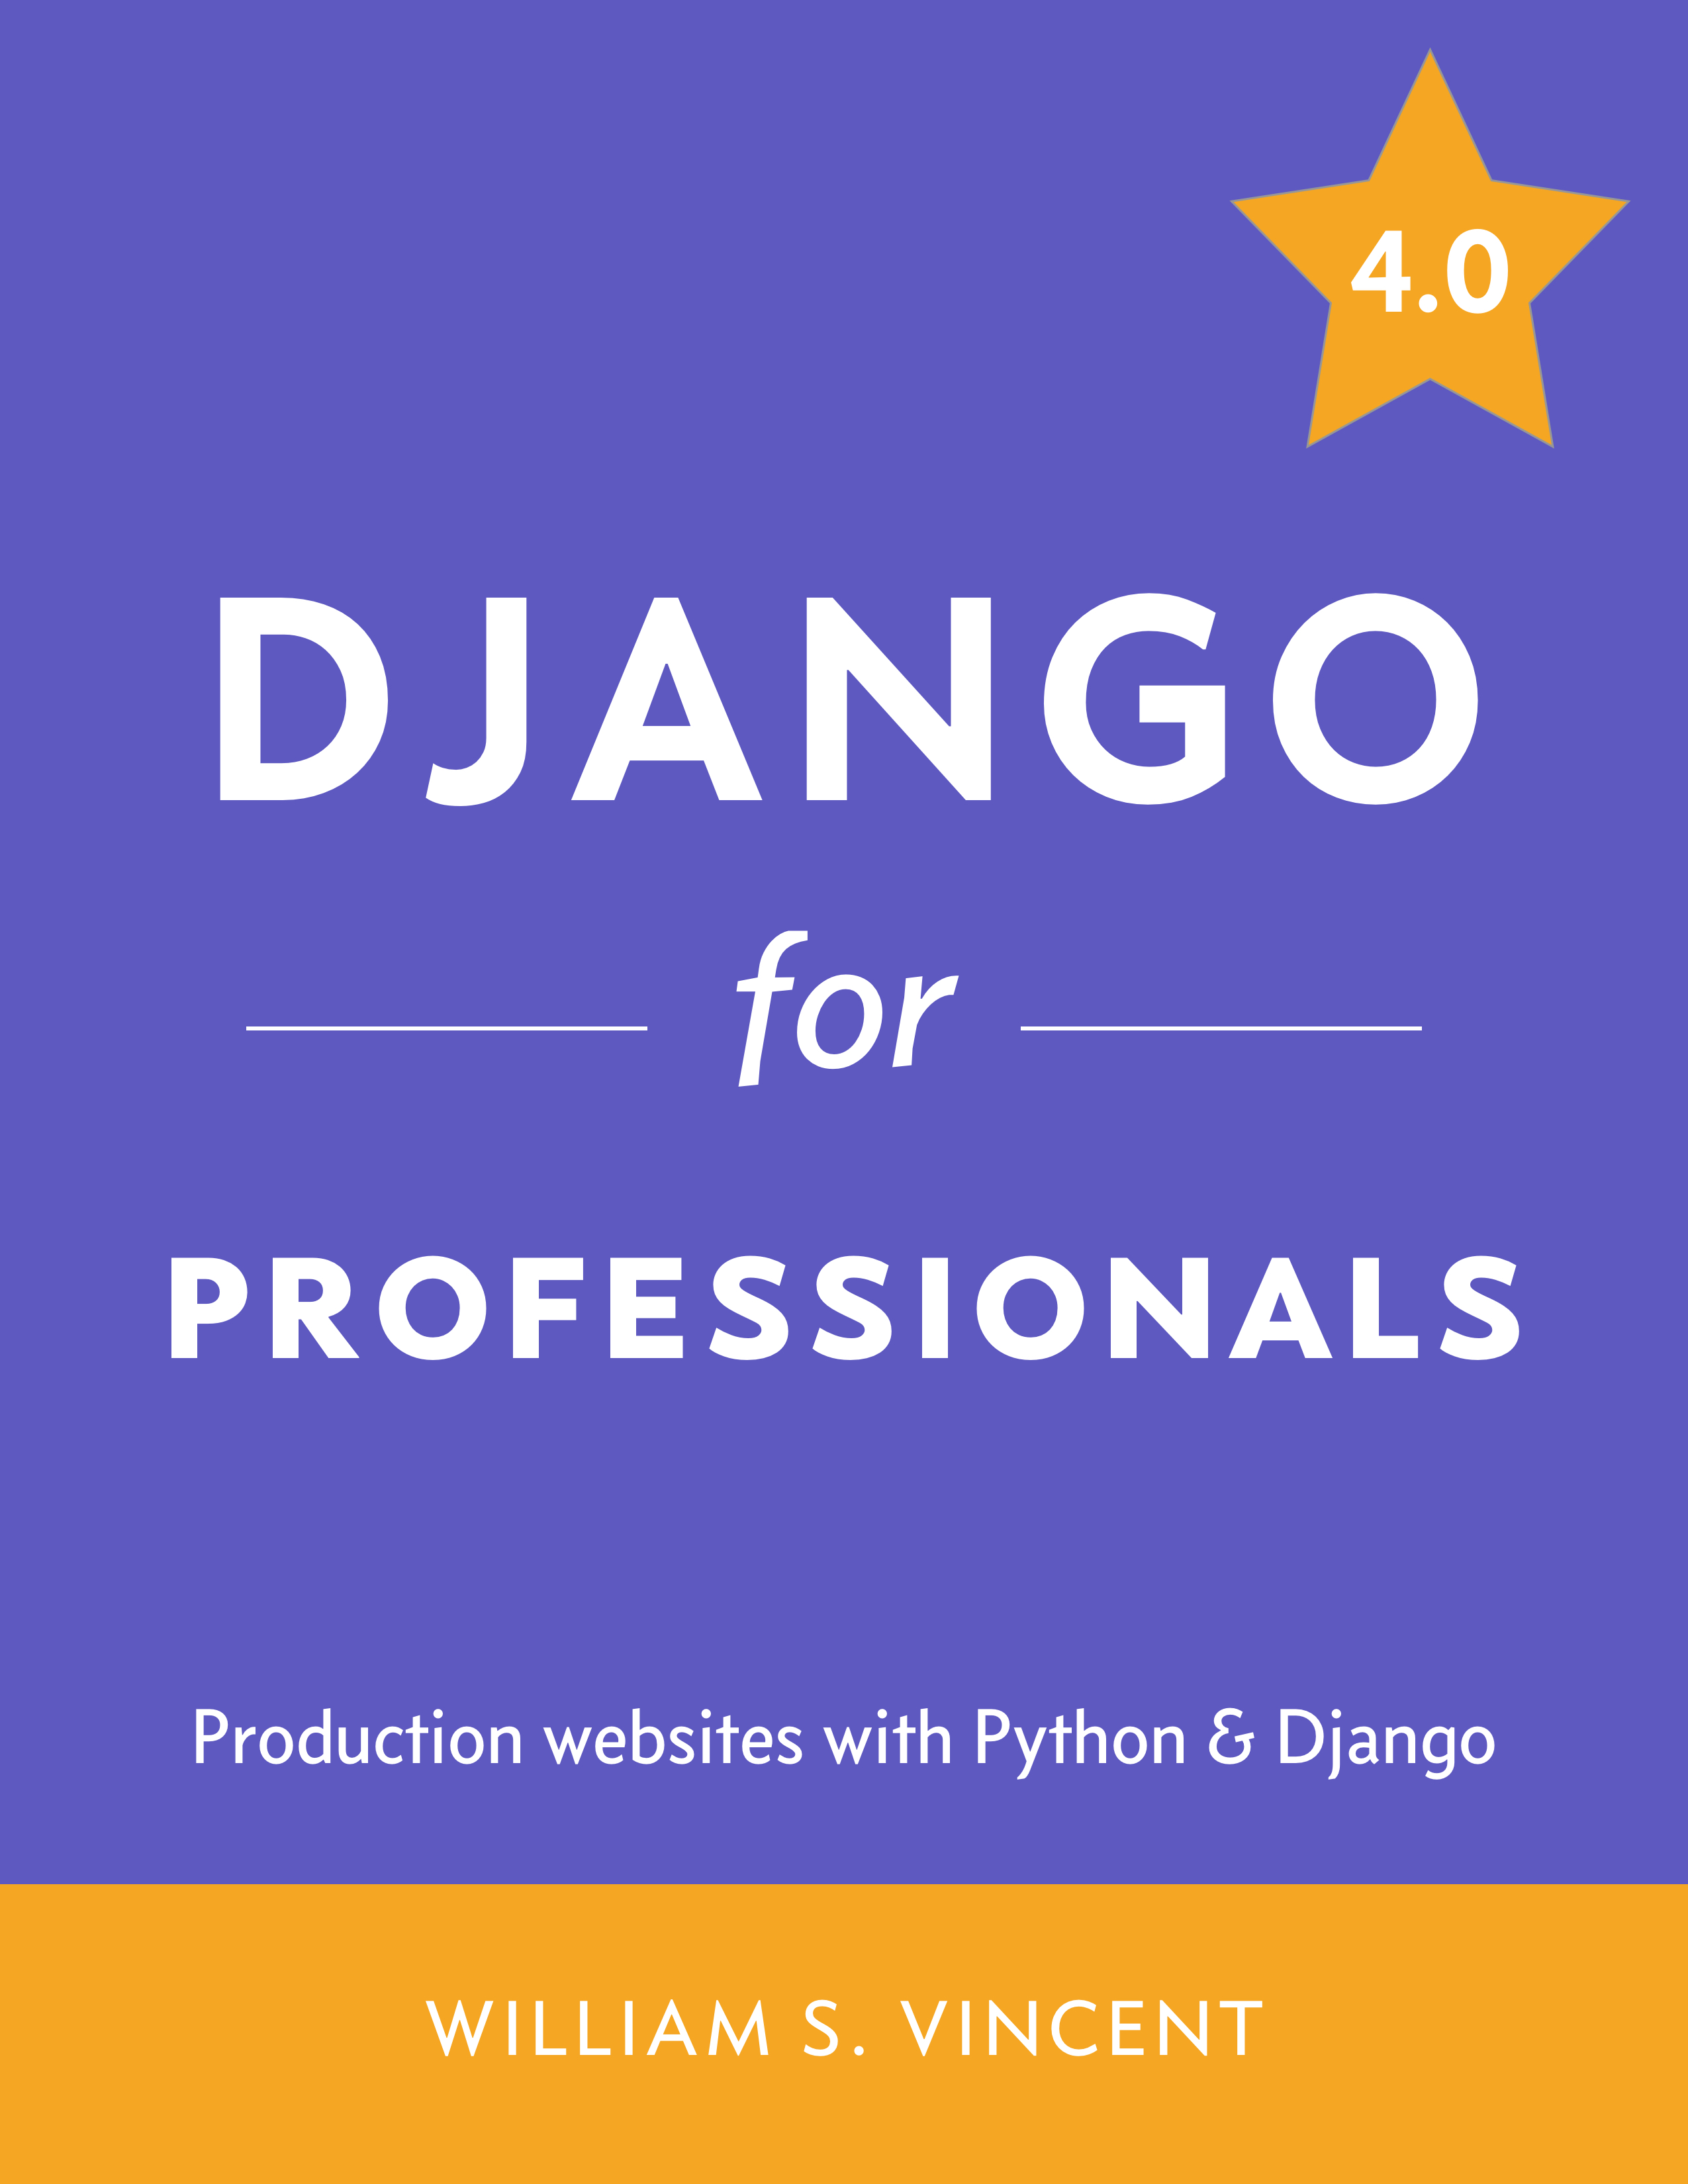 Django for APIs book cover